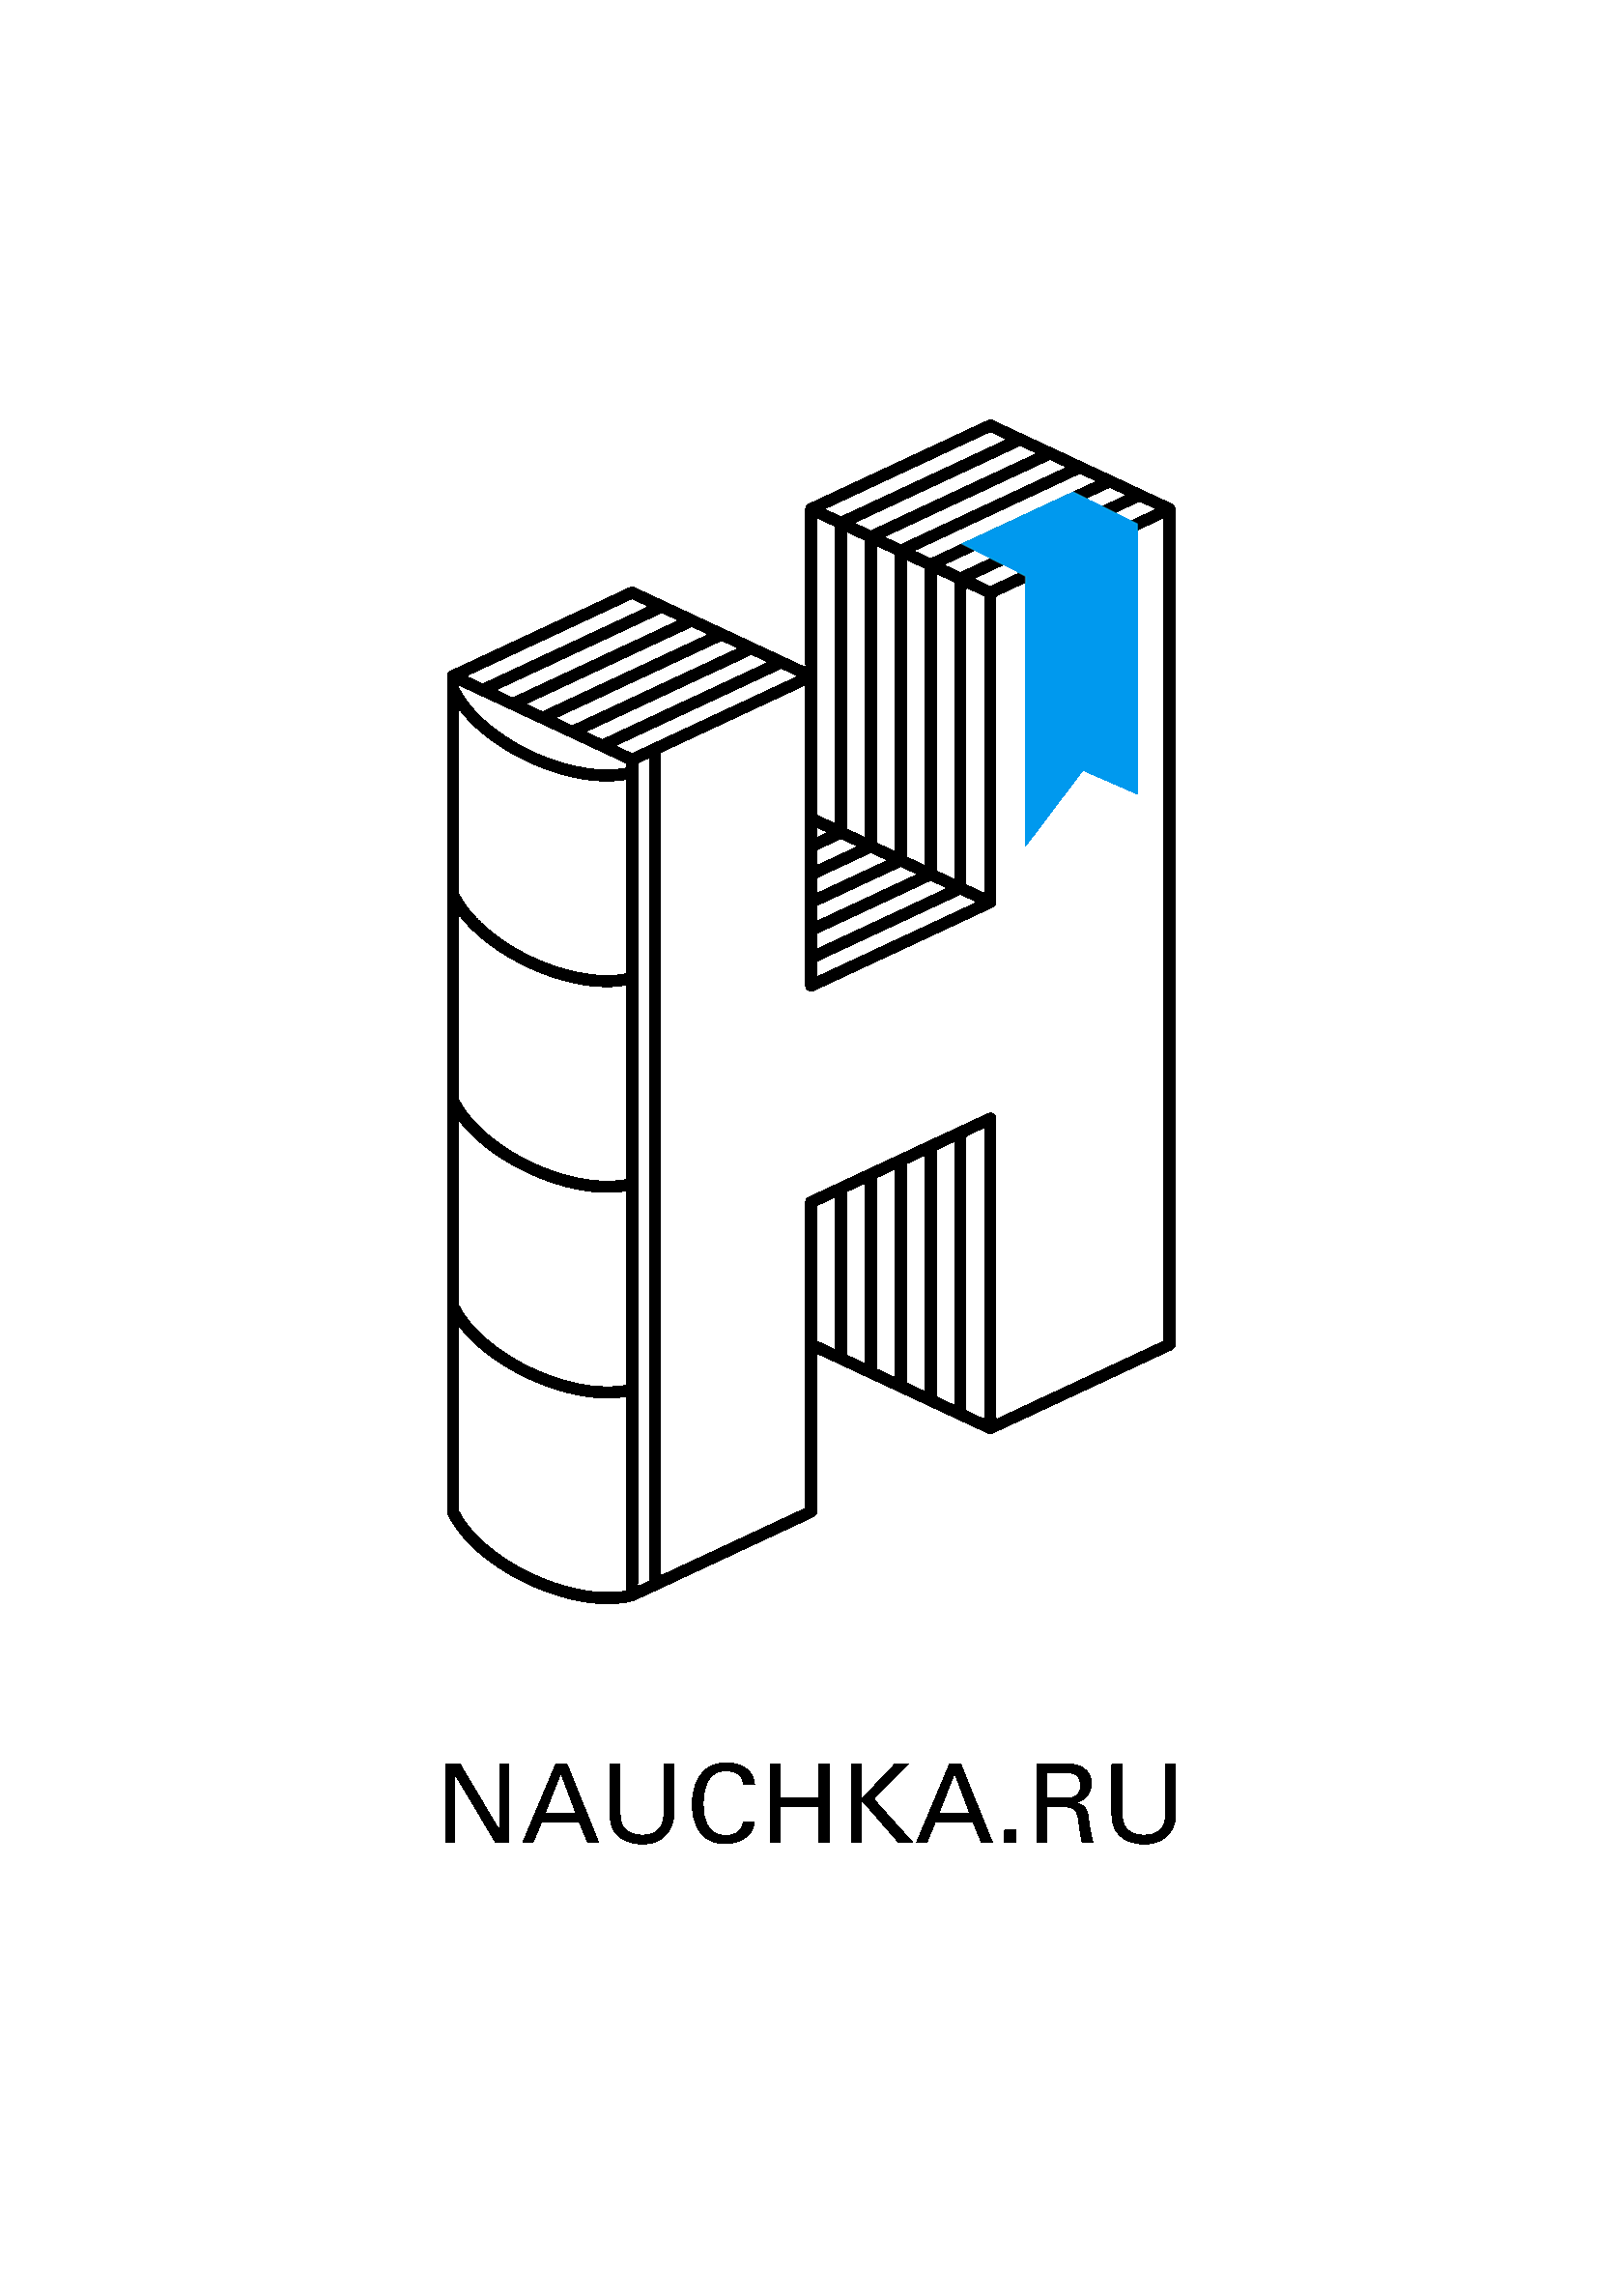 Nauchka